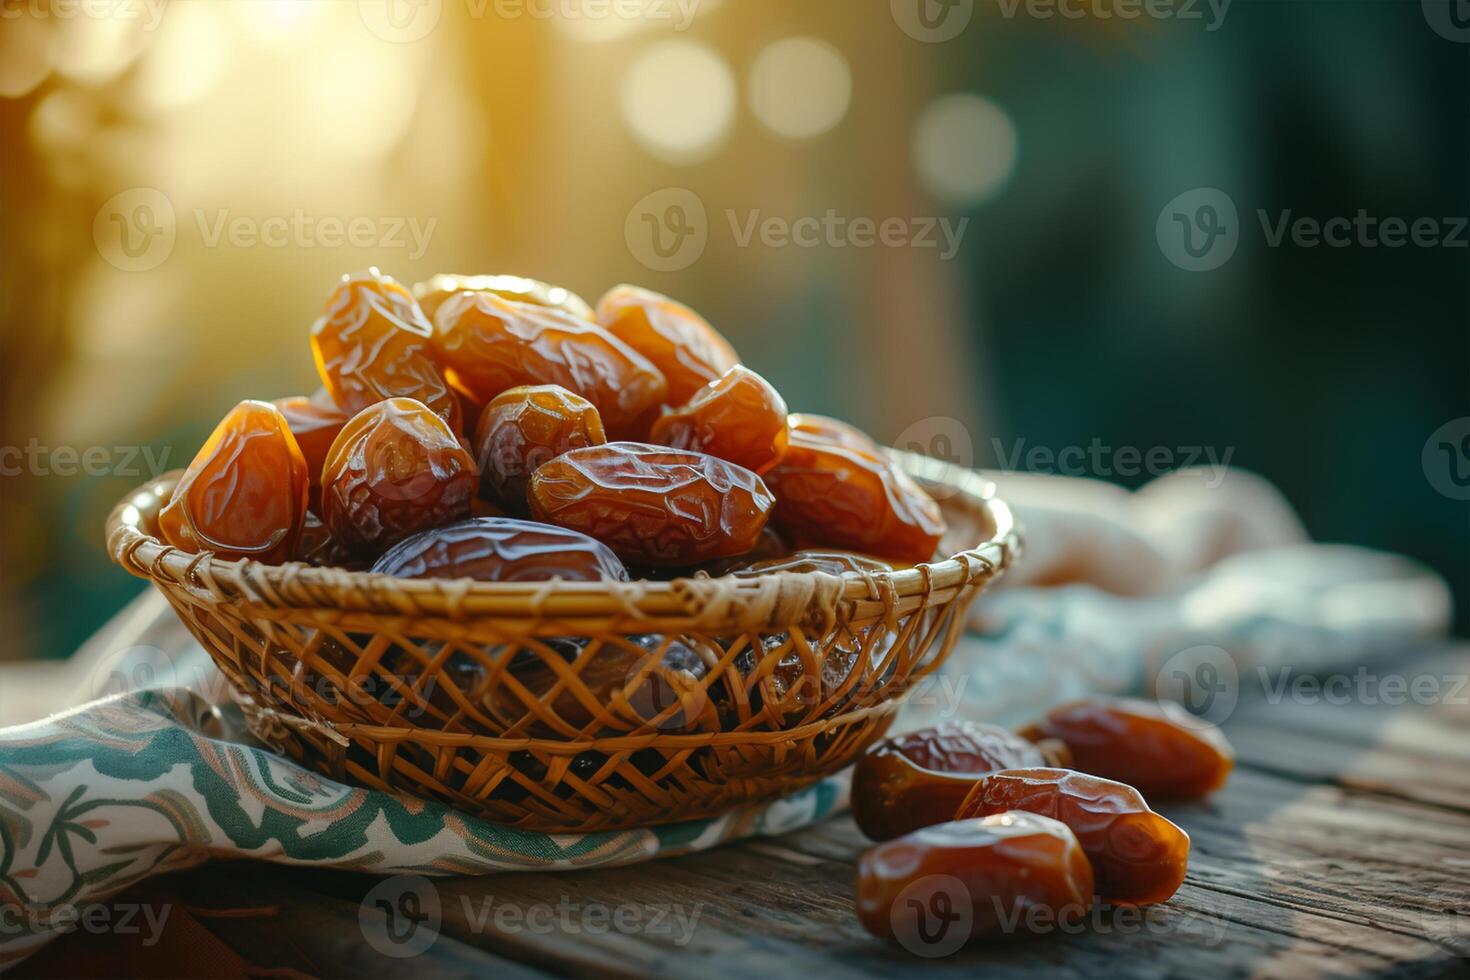 AI generated dates fasting Ramadan photo